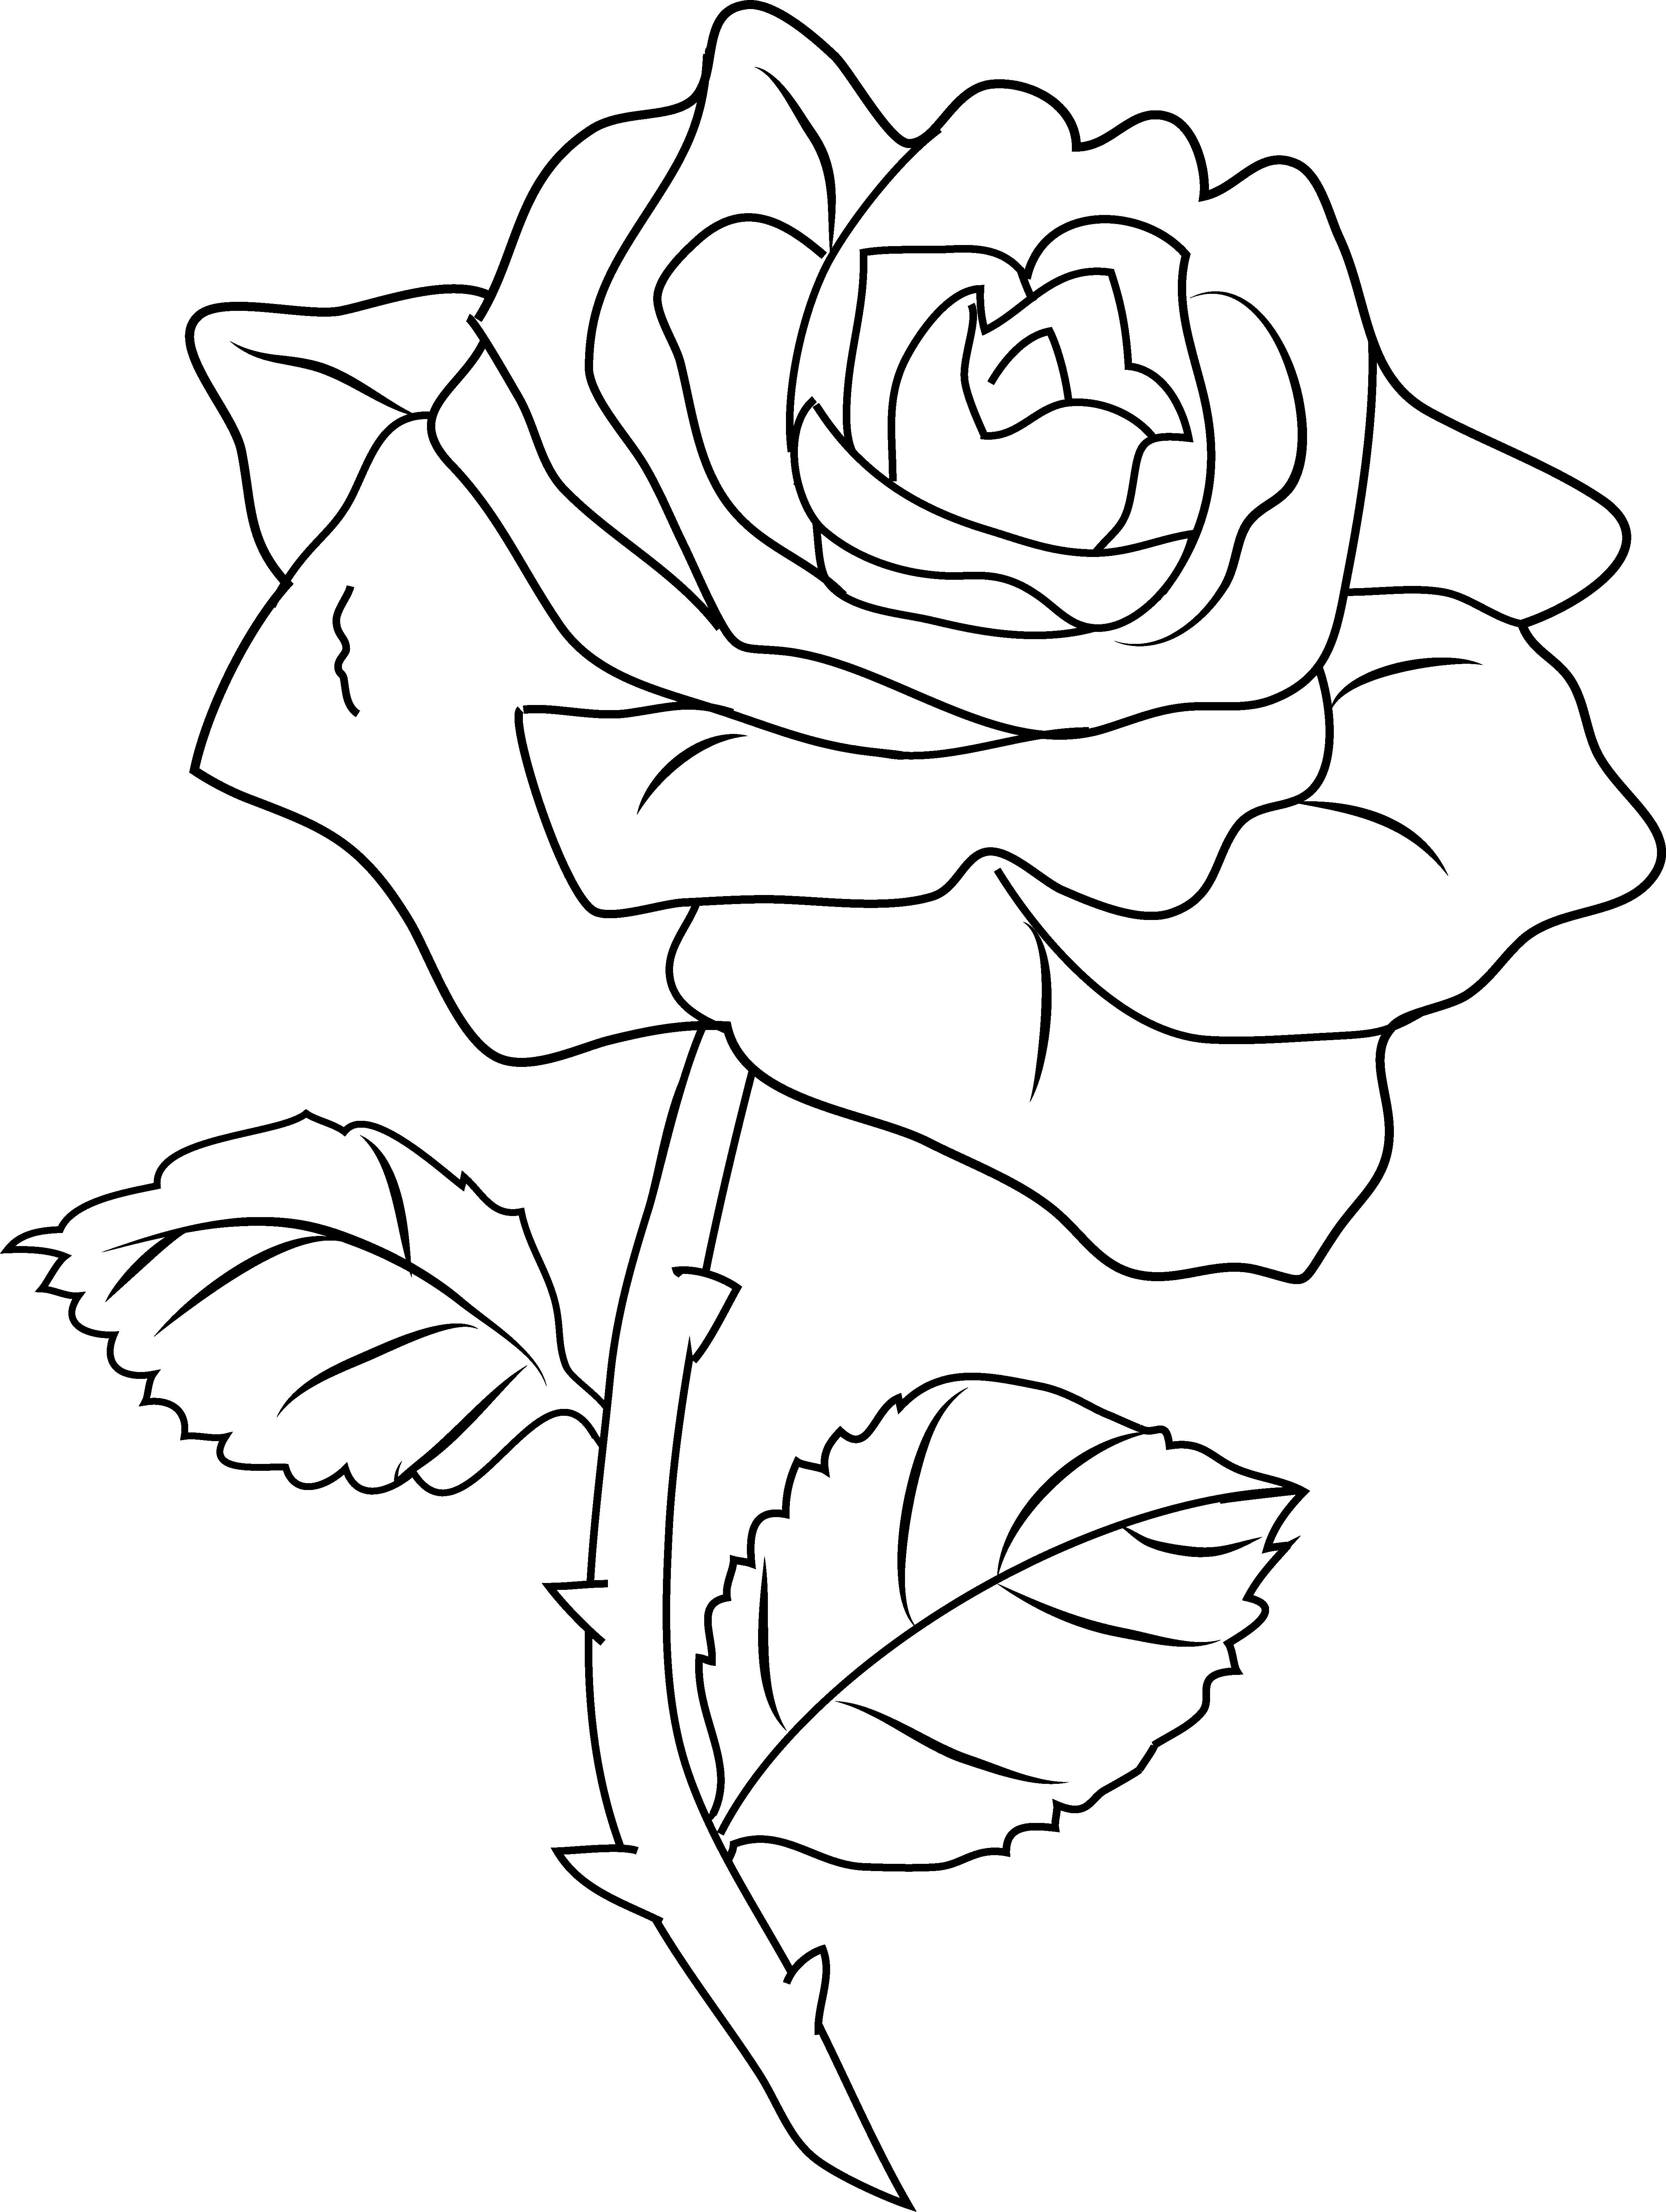 knumathise: Rose Clip Art Outline Images - Black and White Rose Clip Art